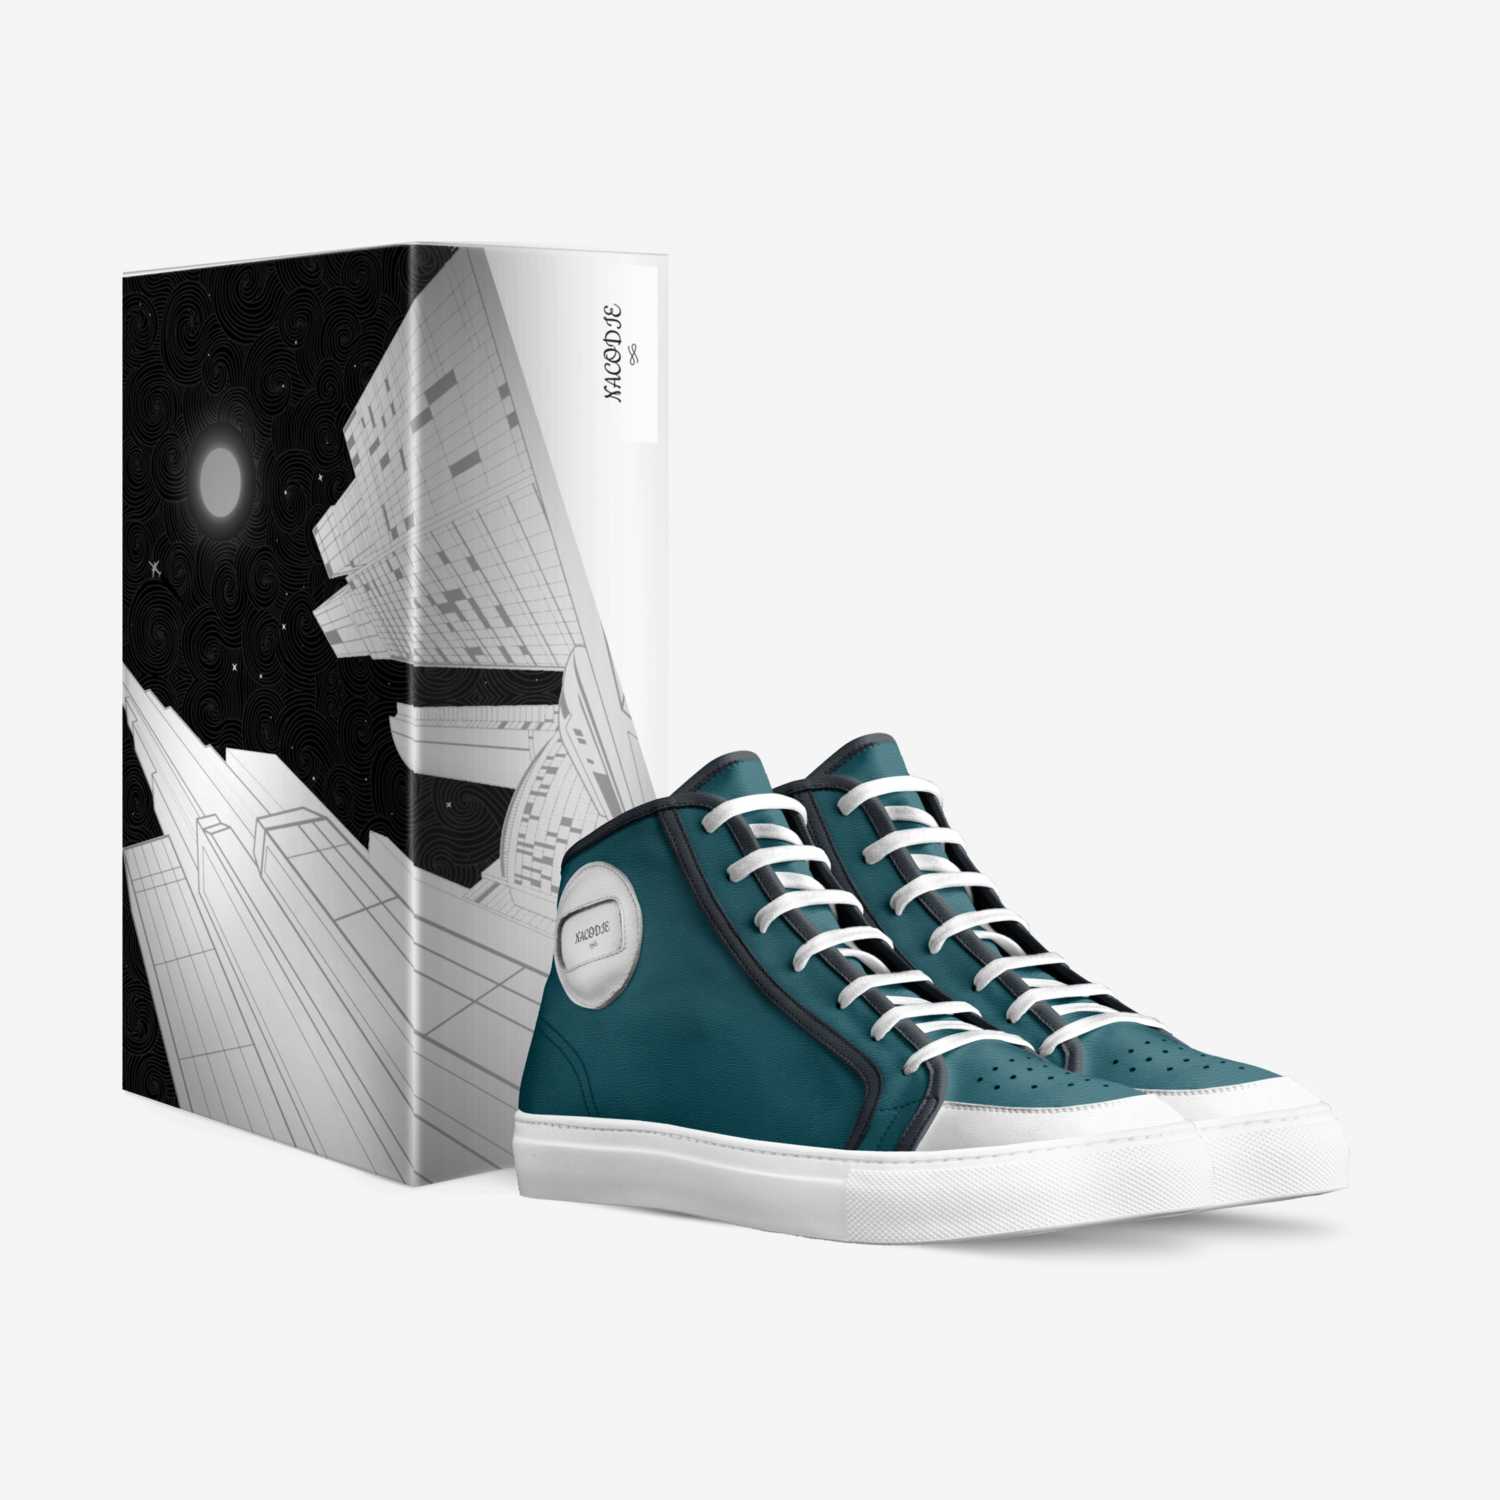 jkljk custom made in Italy shoes by Nacodie Codie | Box view